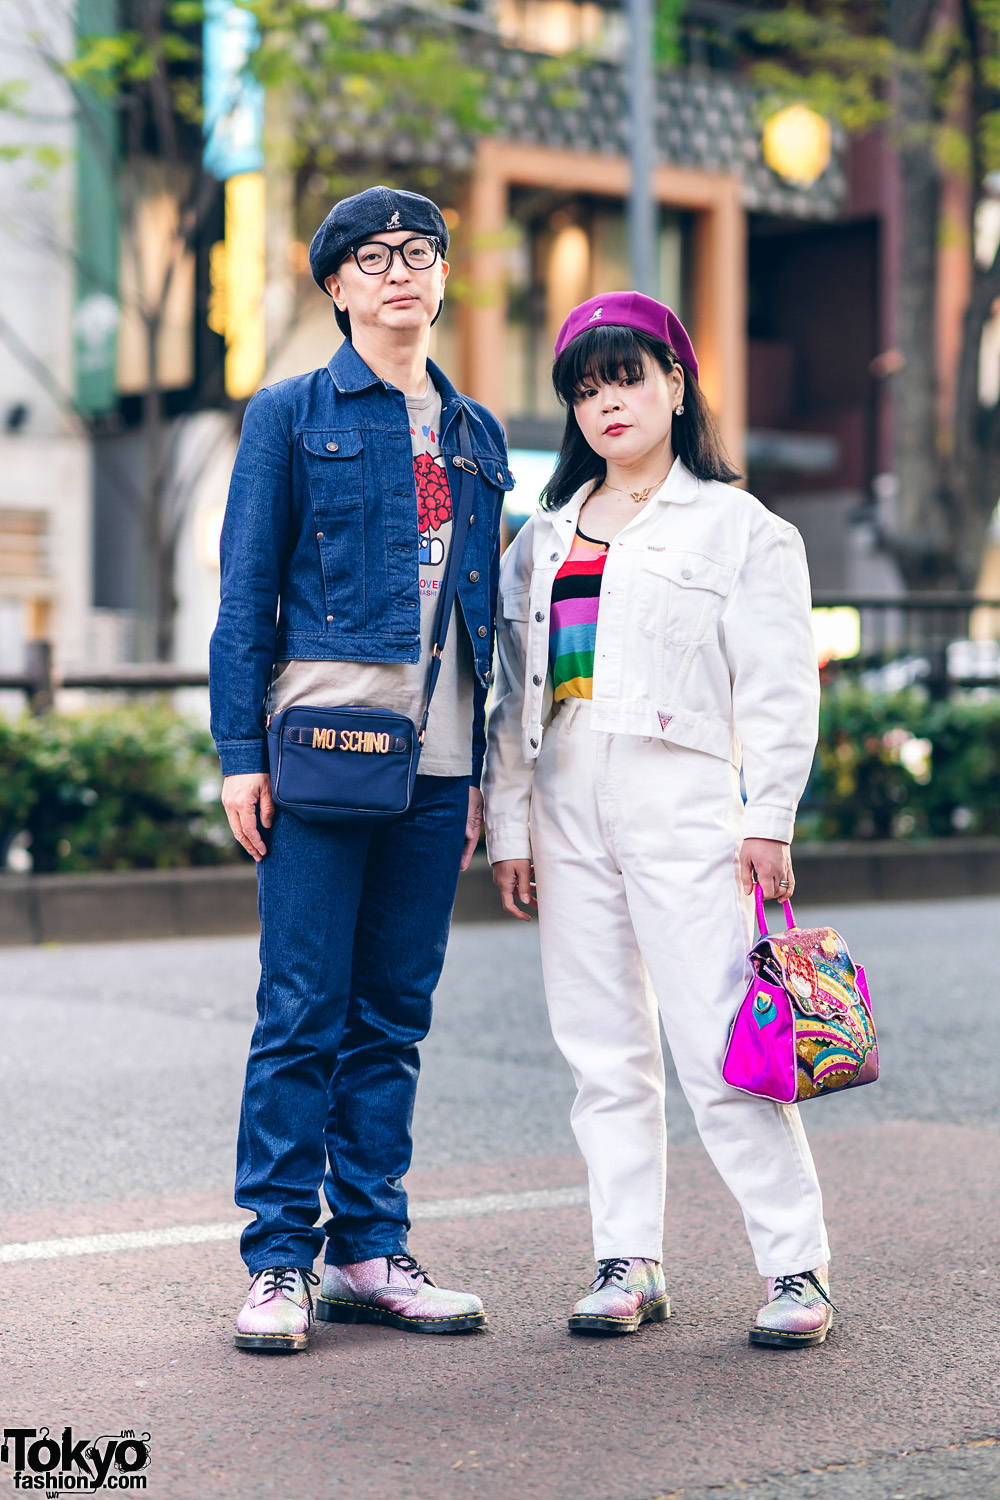 Harajuku Couple's Denim Streetwear Styles w/ Kangol Hats, Moschino, Guess, Undercover Hello Kitty Print Shirt, Sonia Rykiel Keyhole Top, Irregular Choice Bag & Dr. Martens Glitter Boots